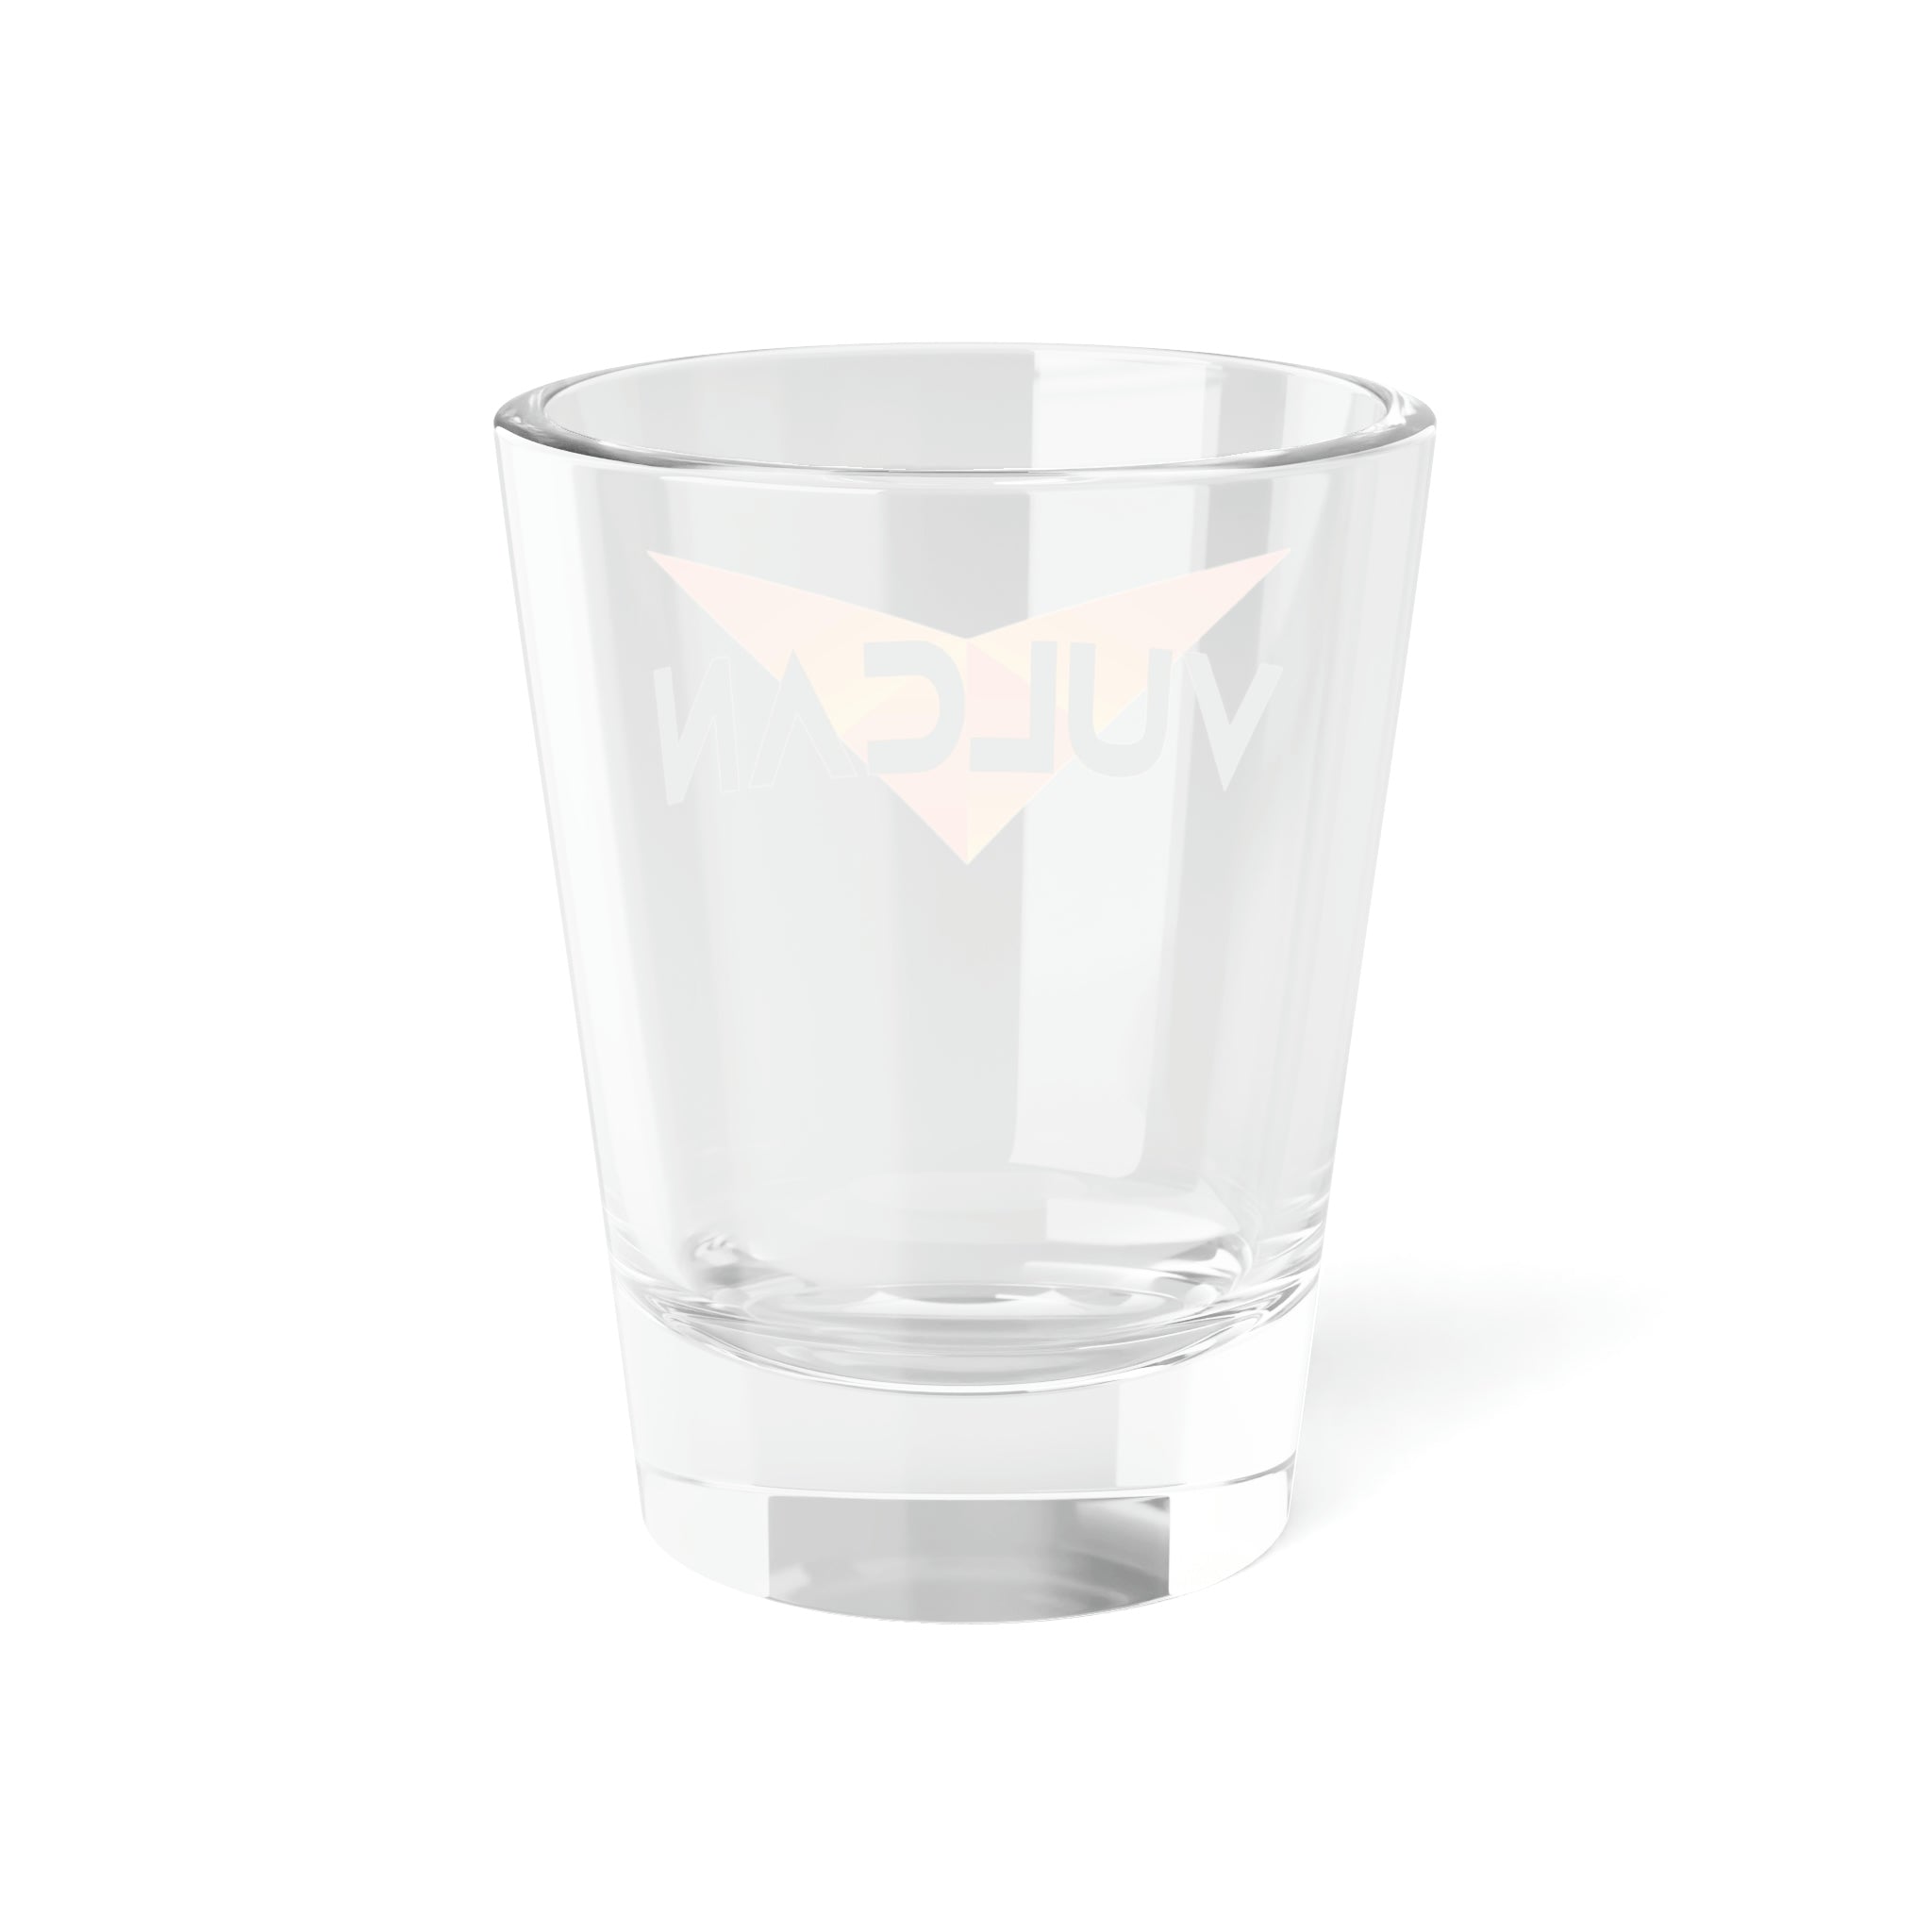 Vulcan Shot Glass, 1.5oz